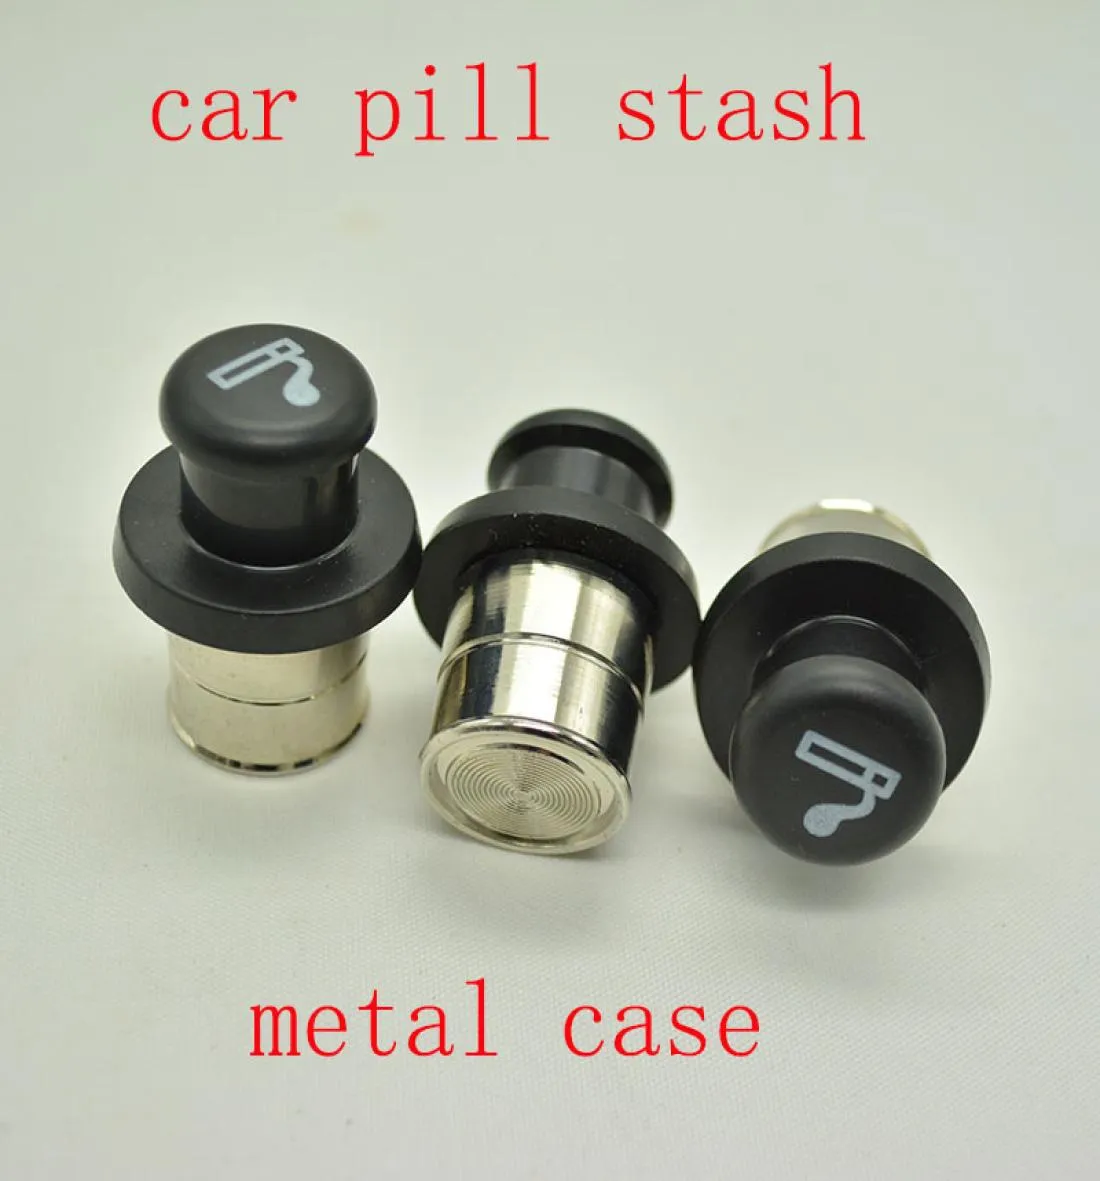 Metal Secret Stash Smoking Car Cigarette Lighter Shaped Hidden Diversion Insert Hidden Pill Box Container Pill Case Storage Box1794581